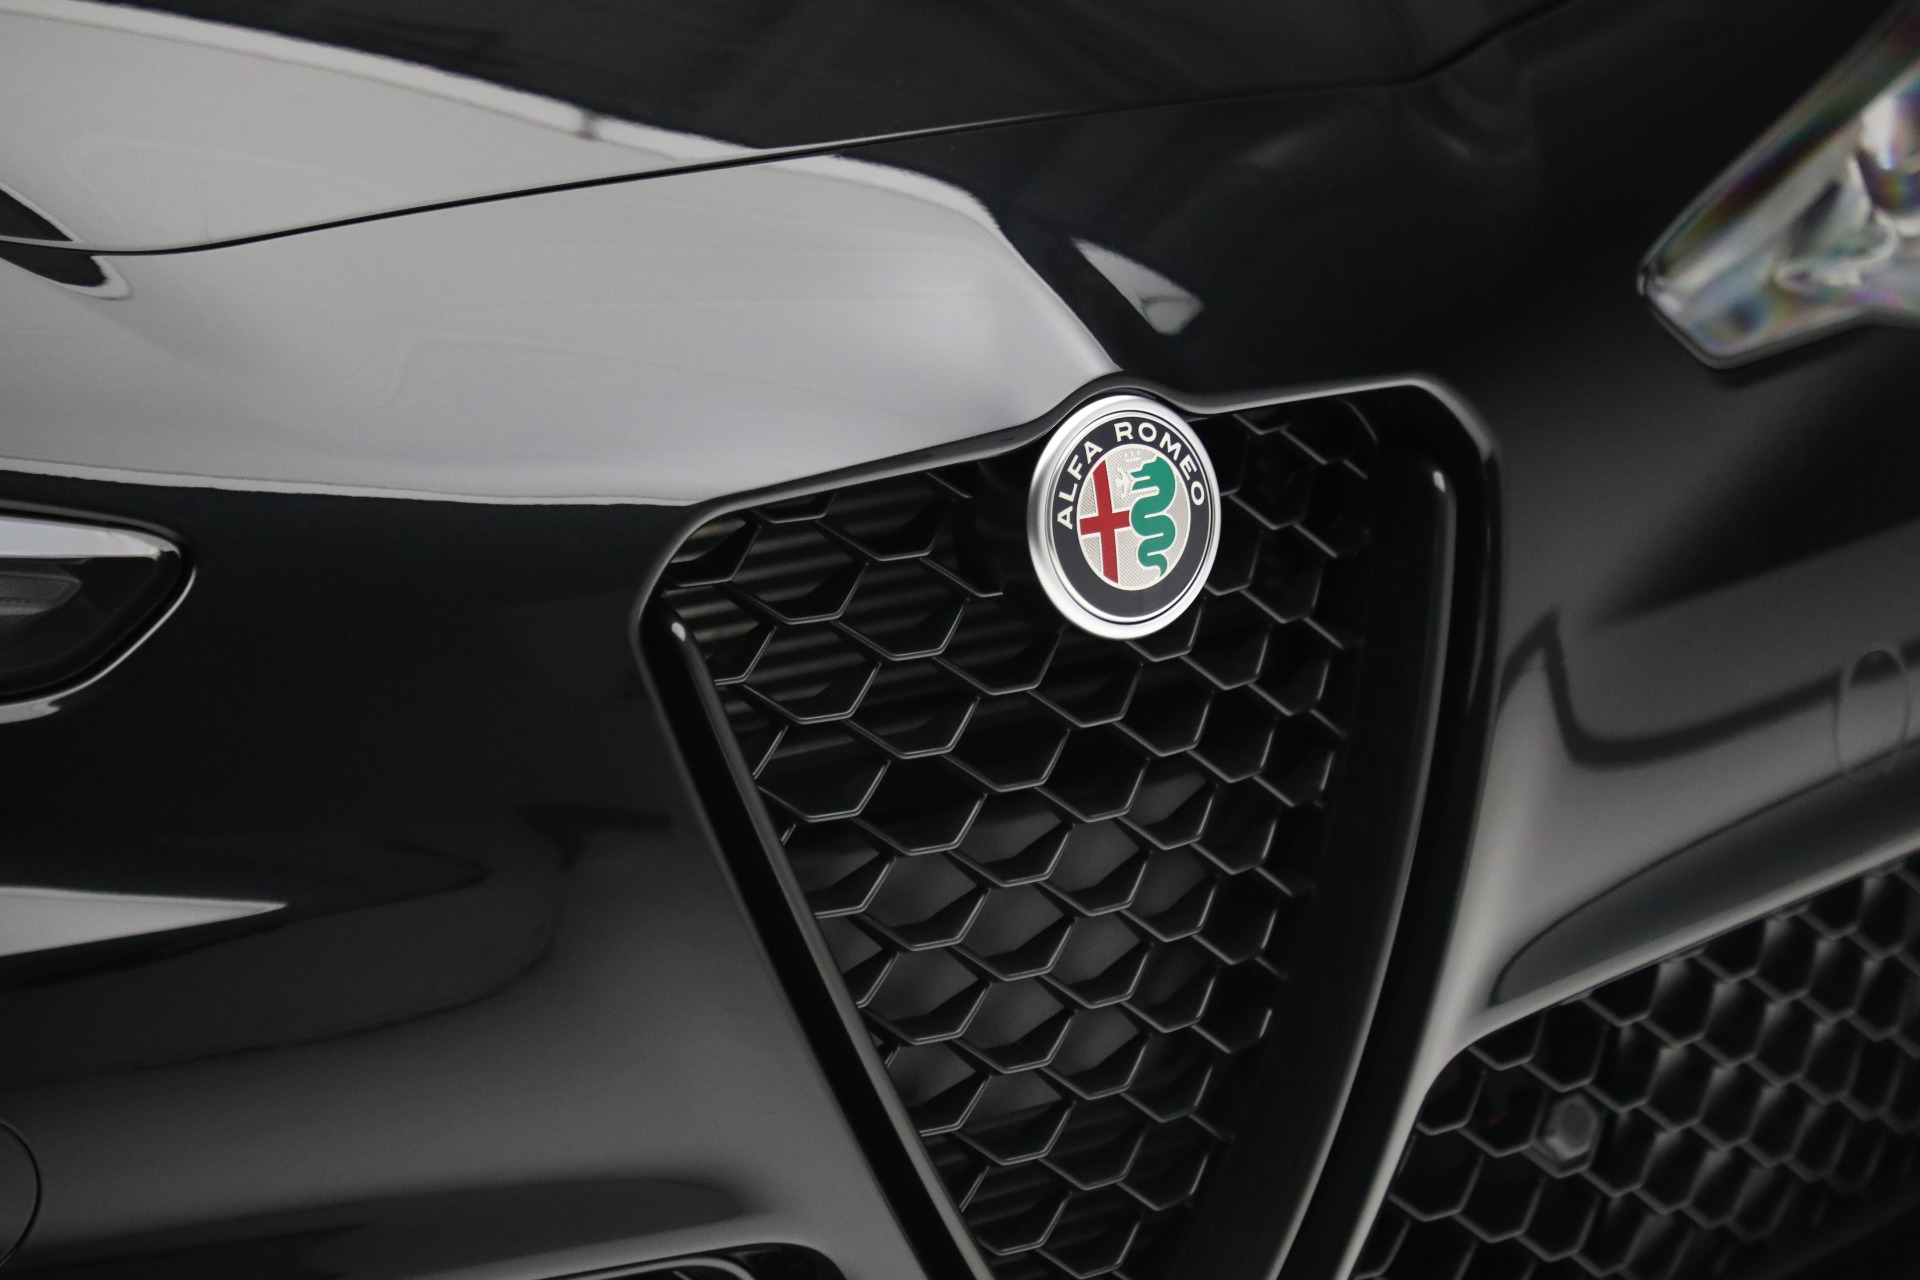 New 2022 Alfa Romeo Giulia Veloce